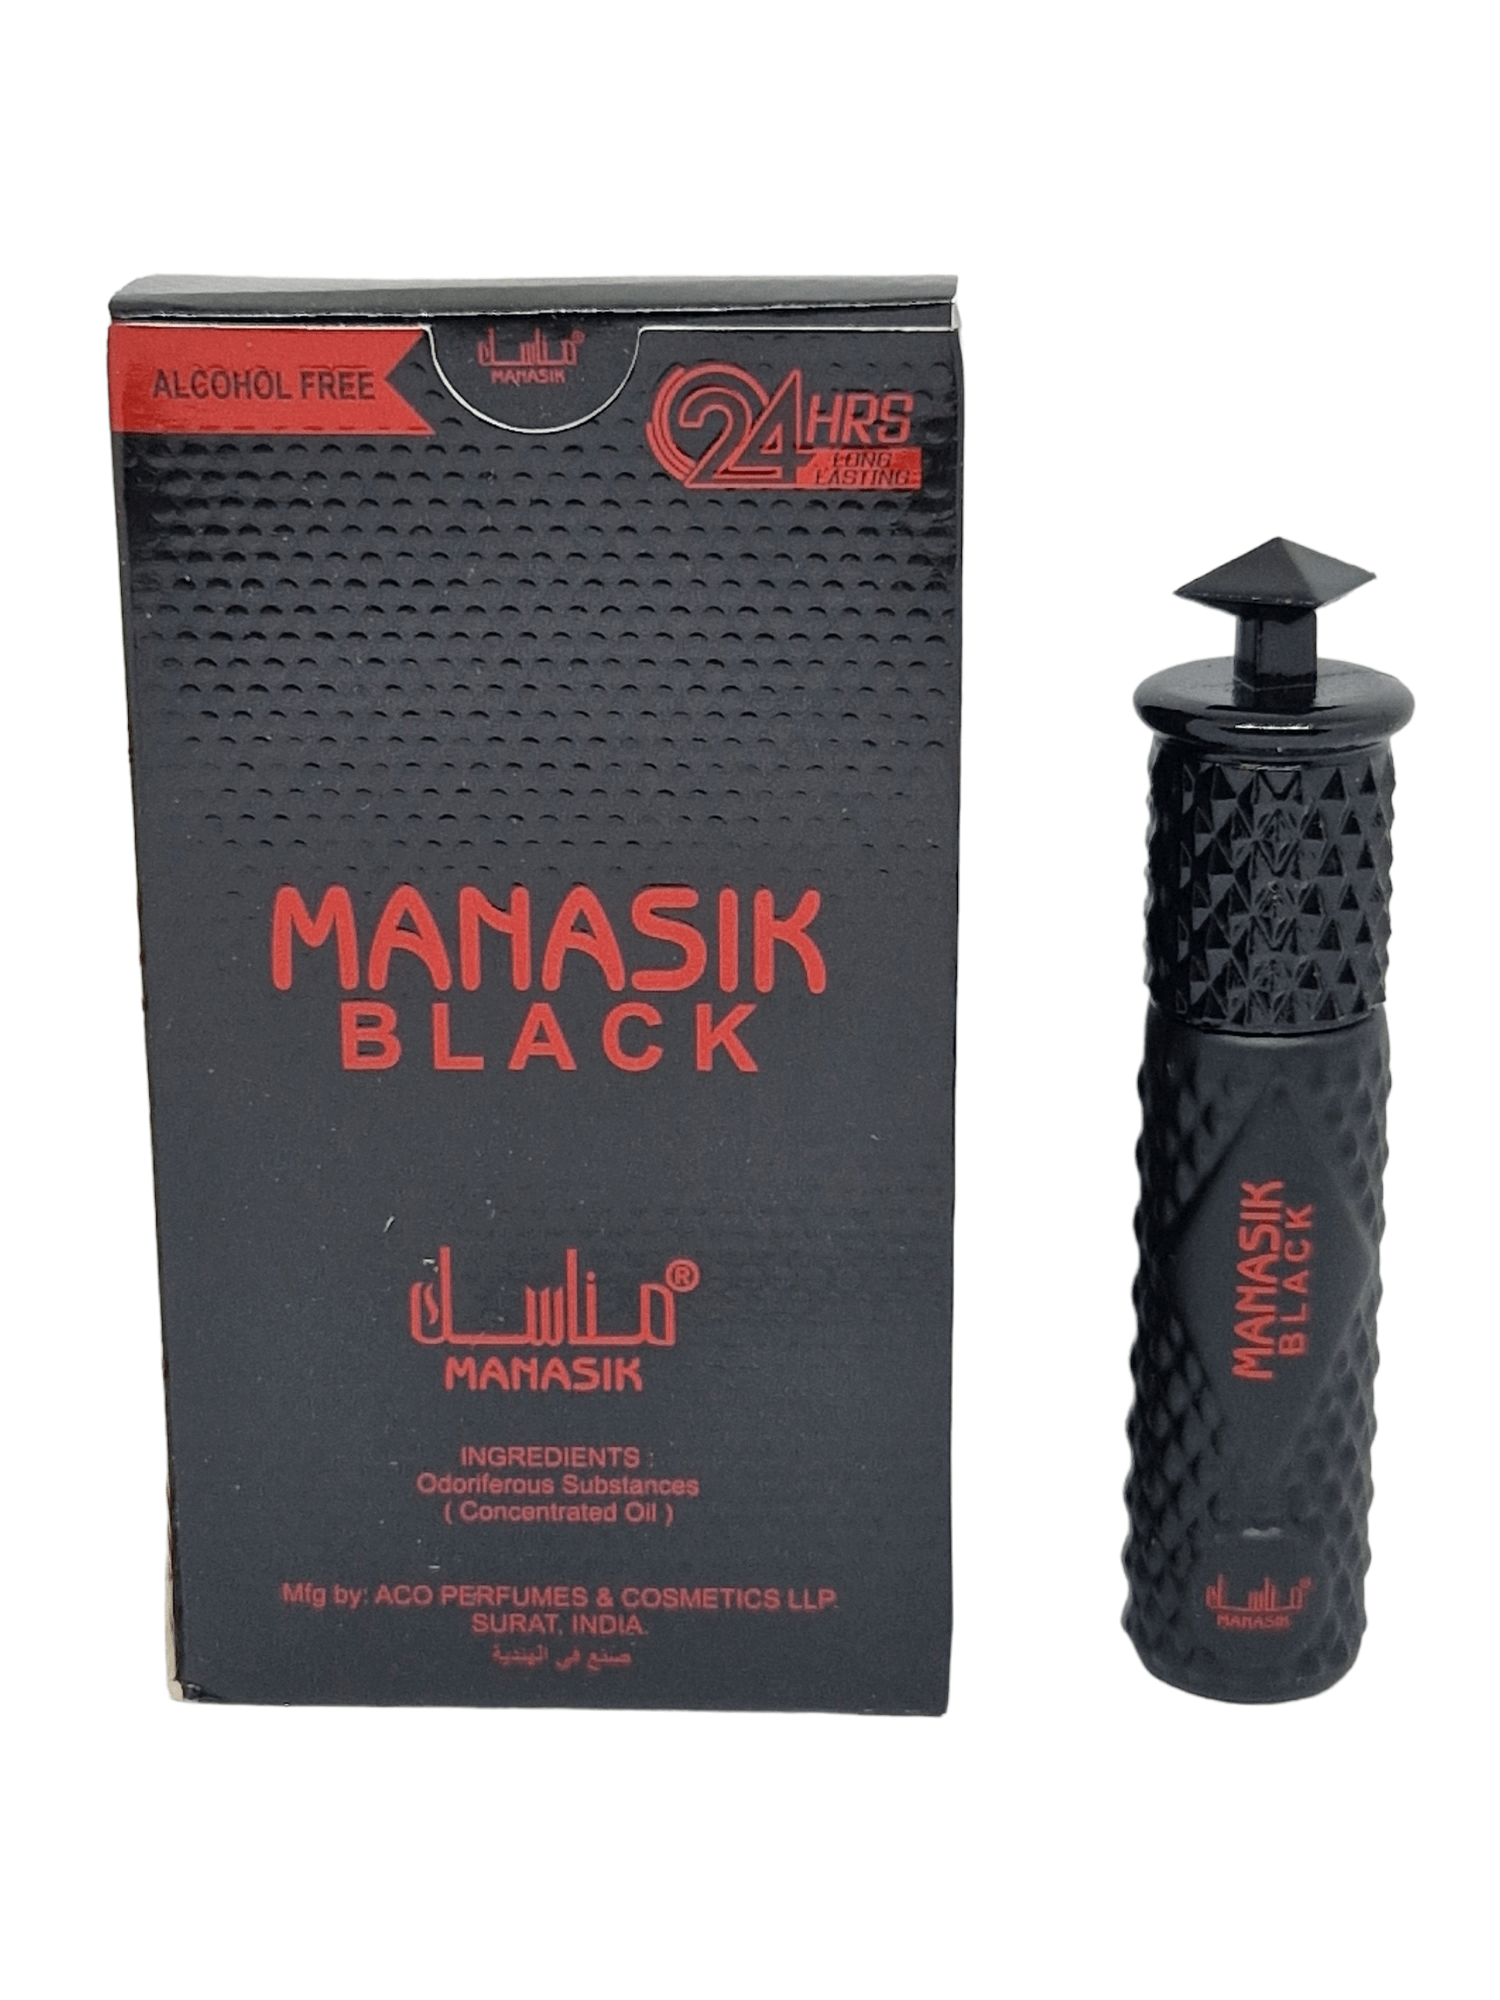 Black - 6ml roll on - Manasik - Alcohol Free